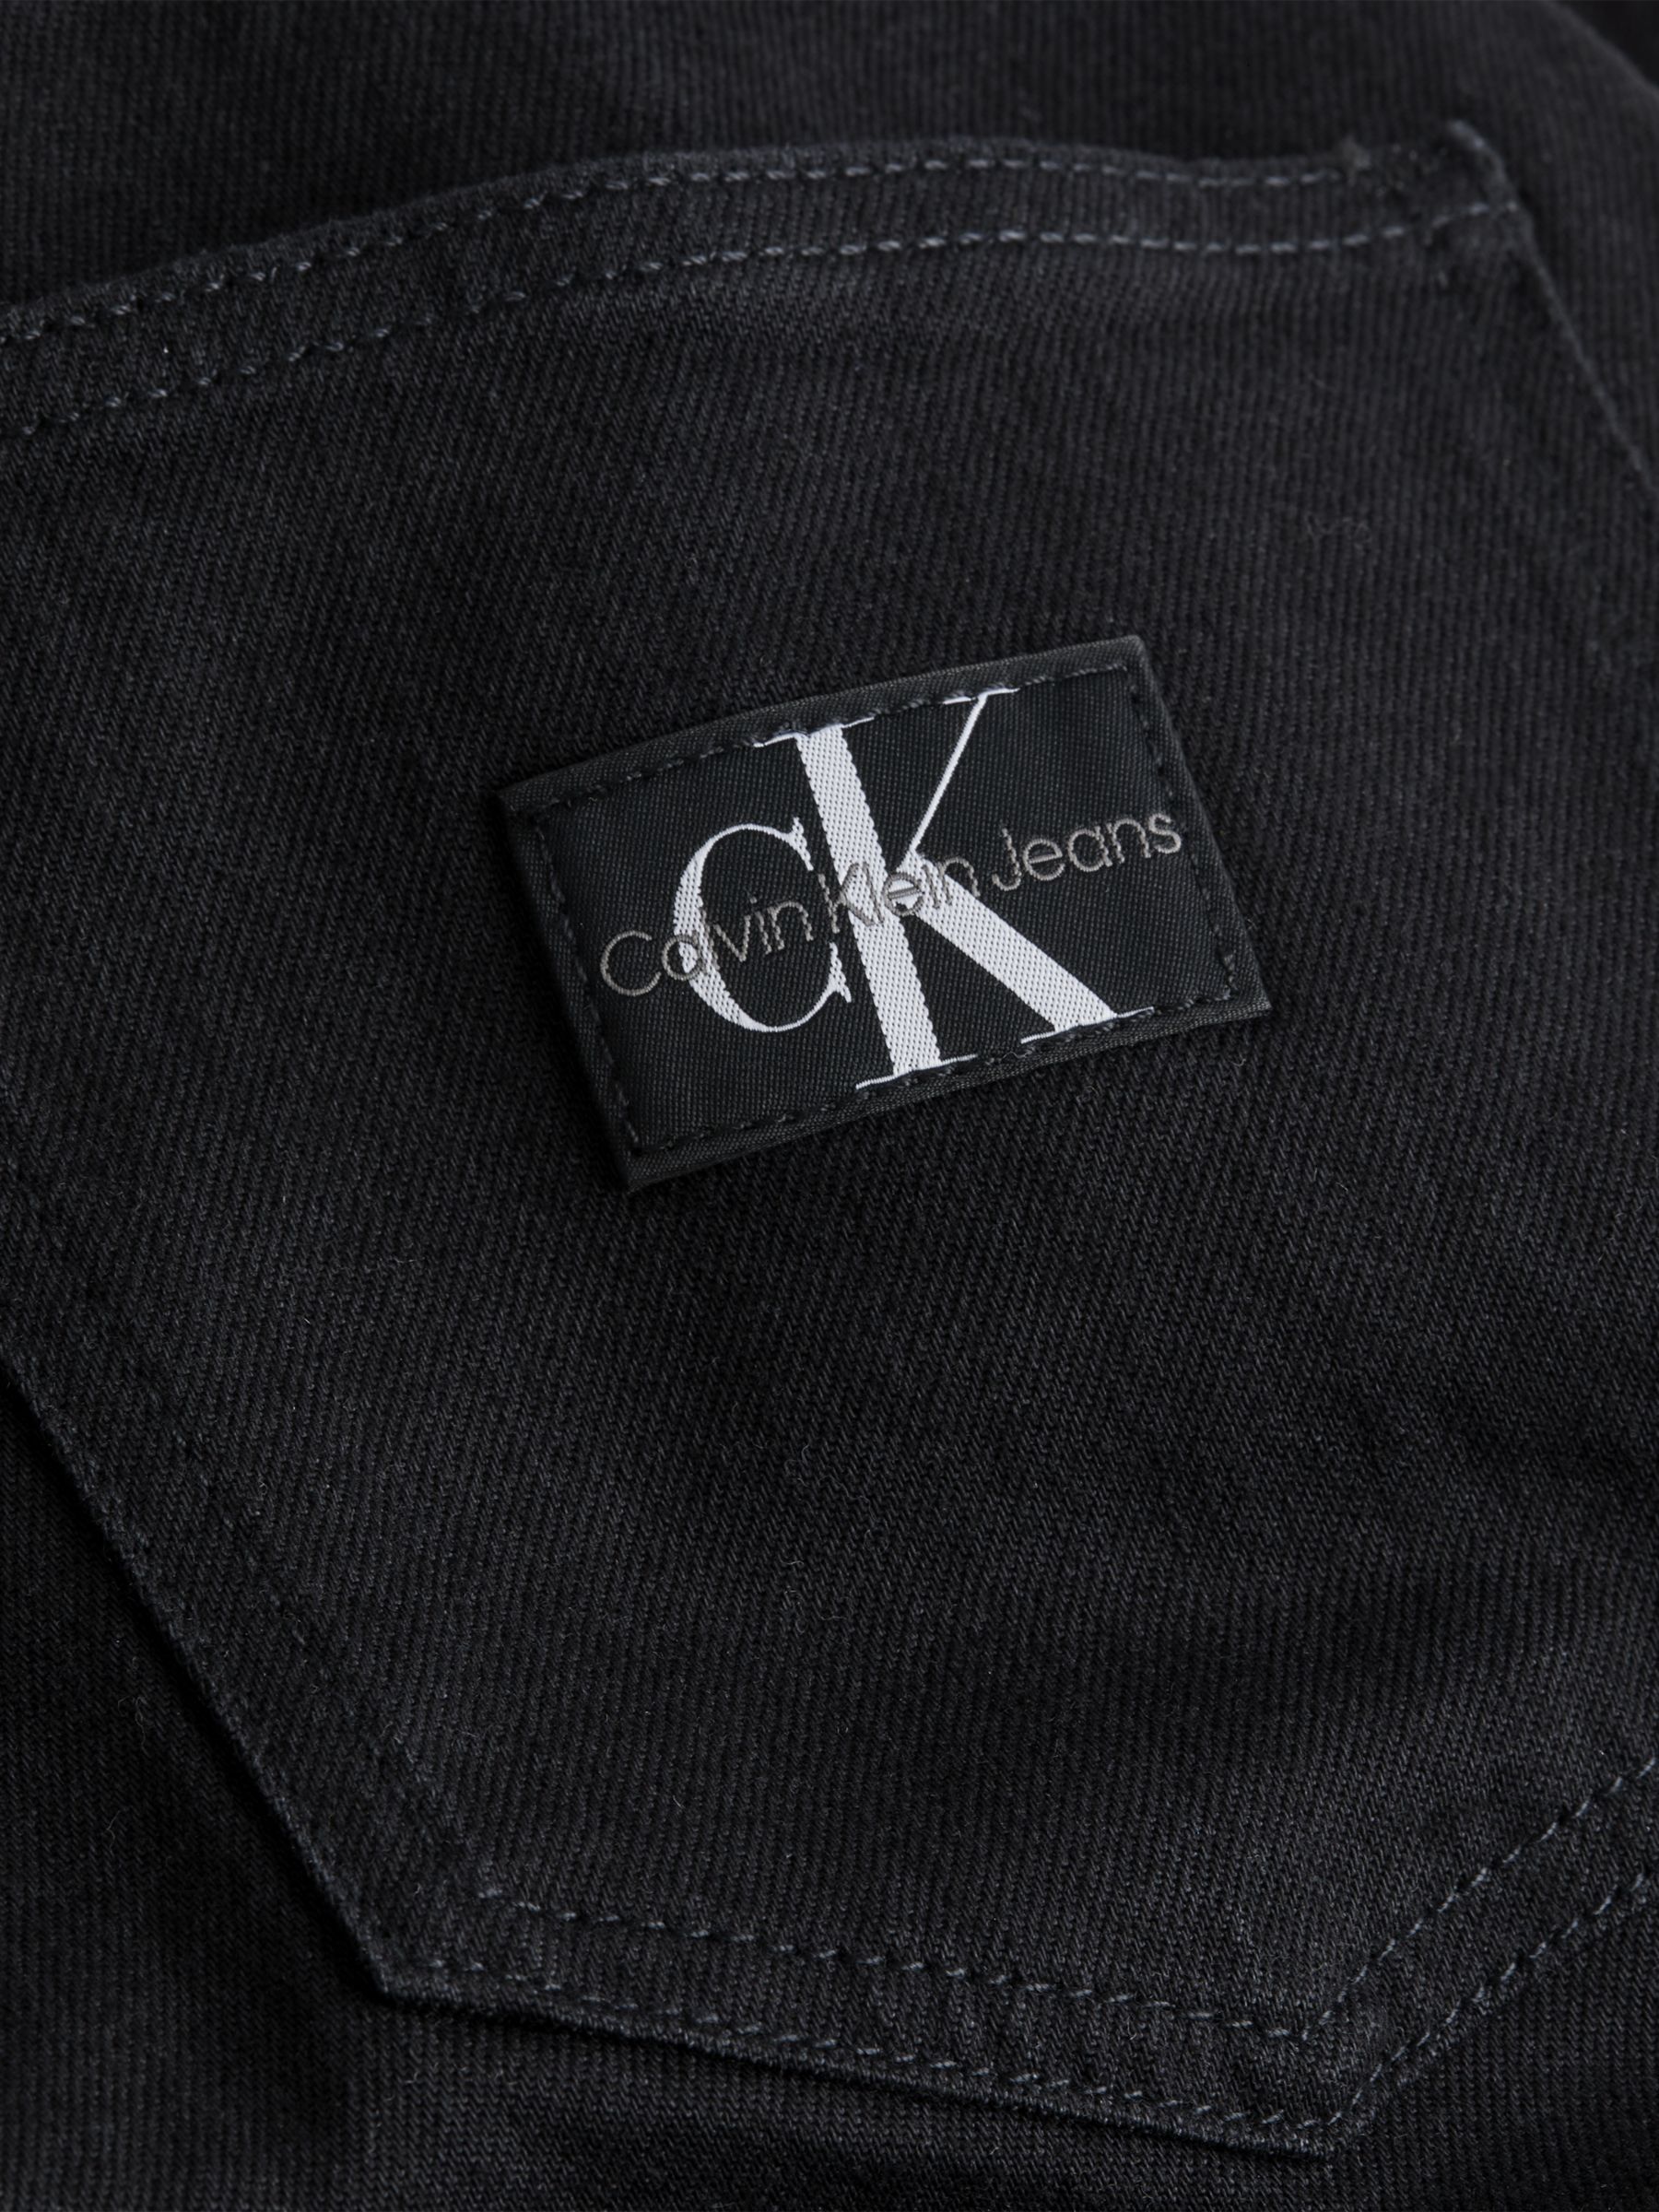 Calvin Klein Mom Fit Cropped Jeans, Black Denim Rinse, 26